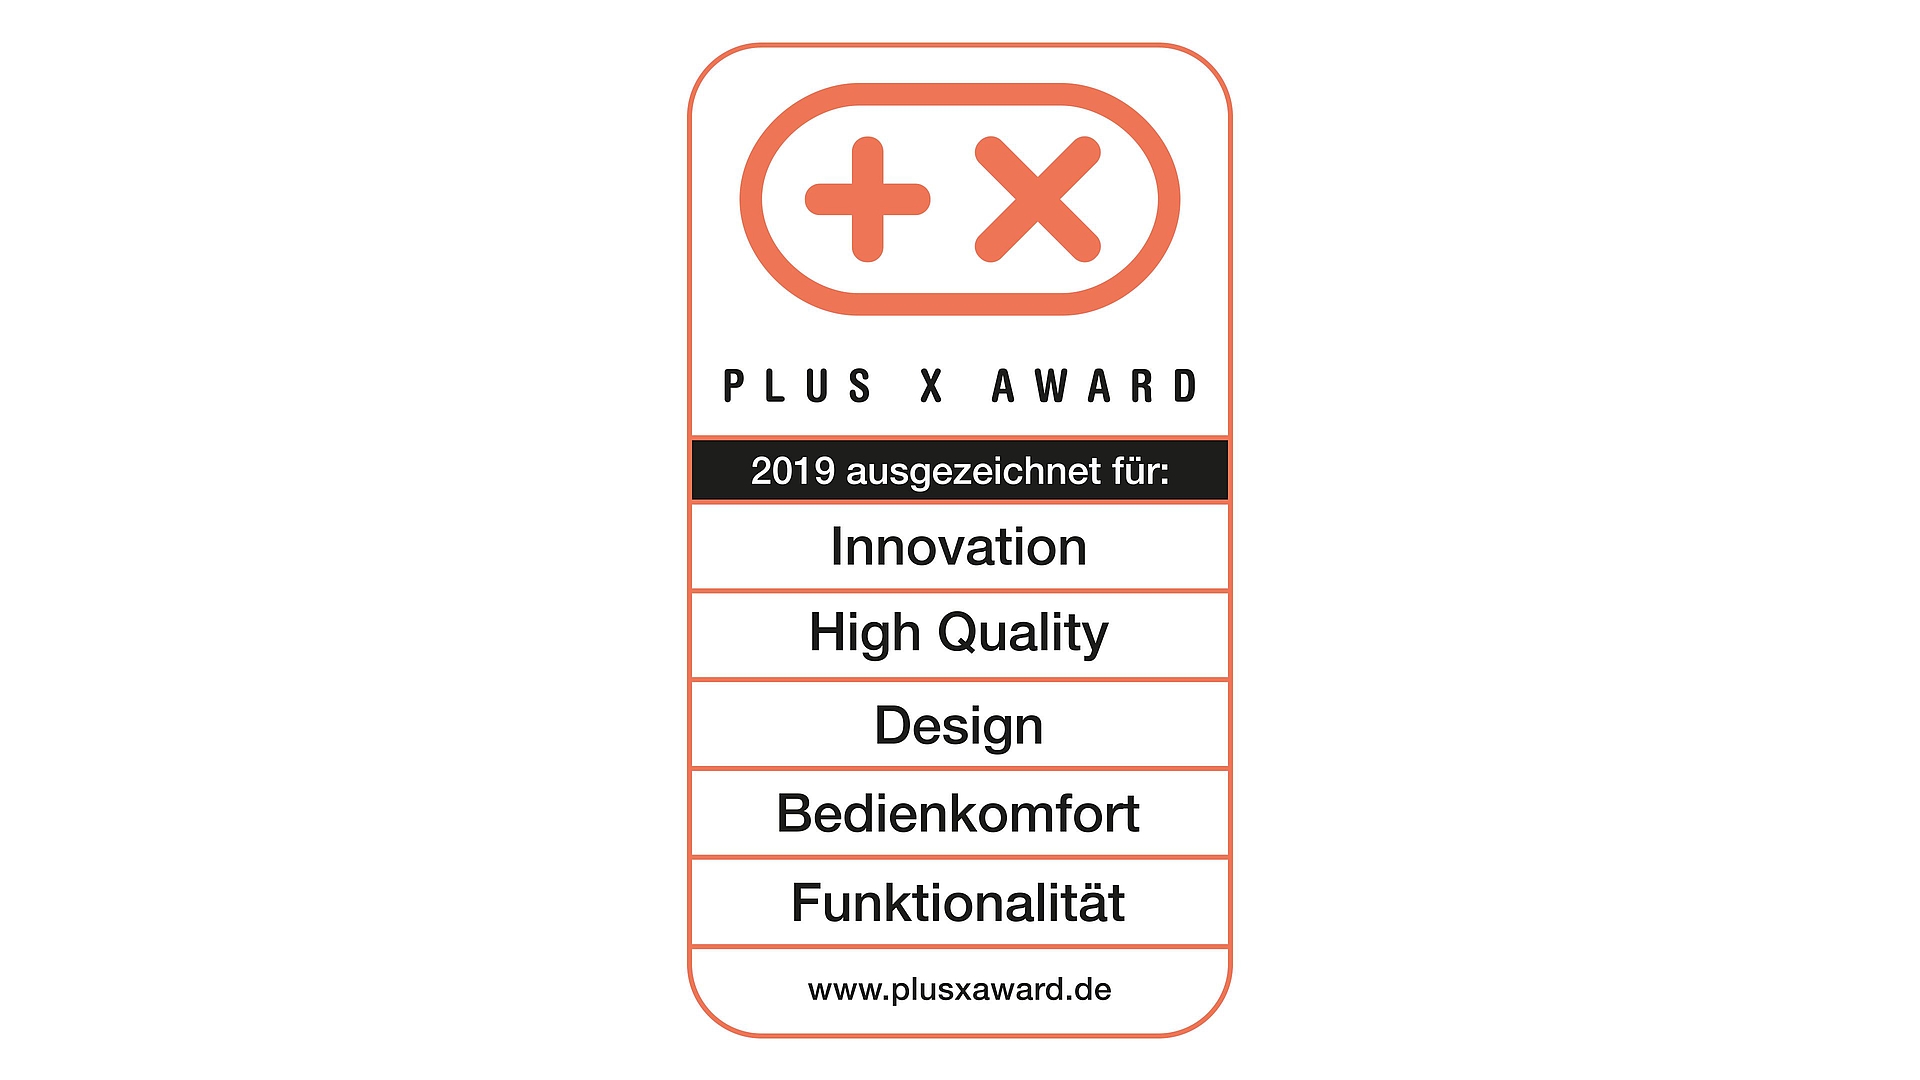 Award_pxa_ihqdbf_2019_de.jpg